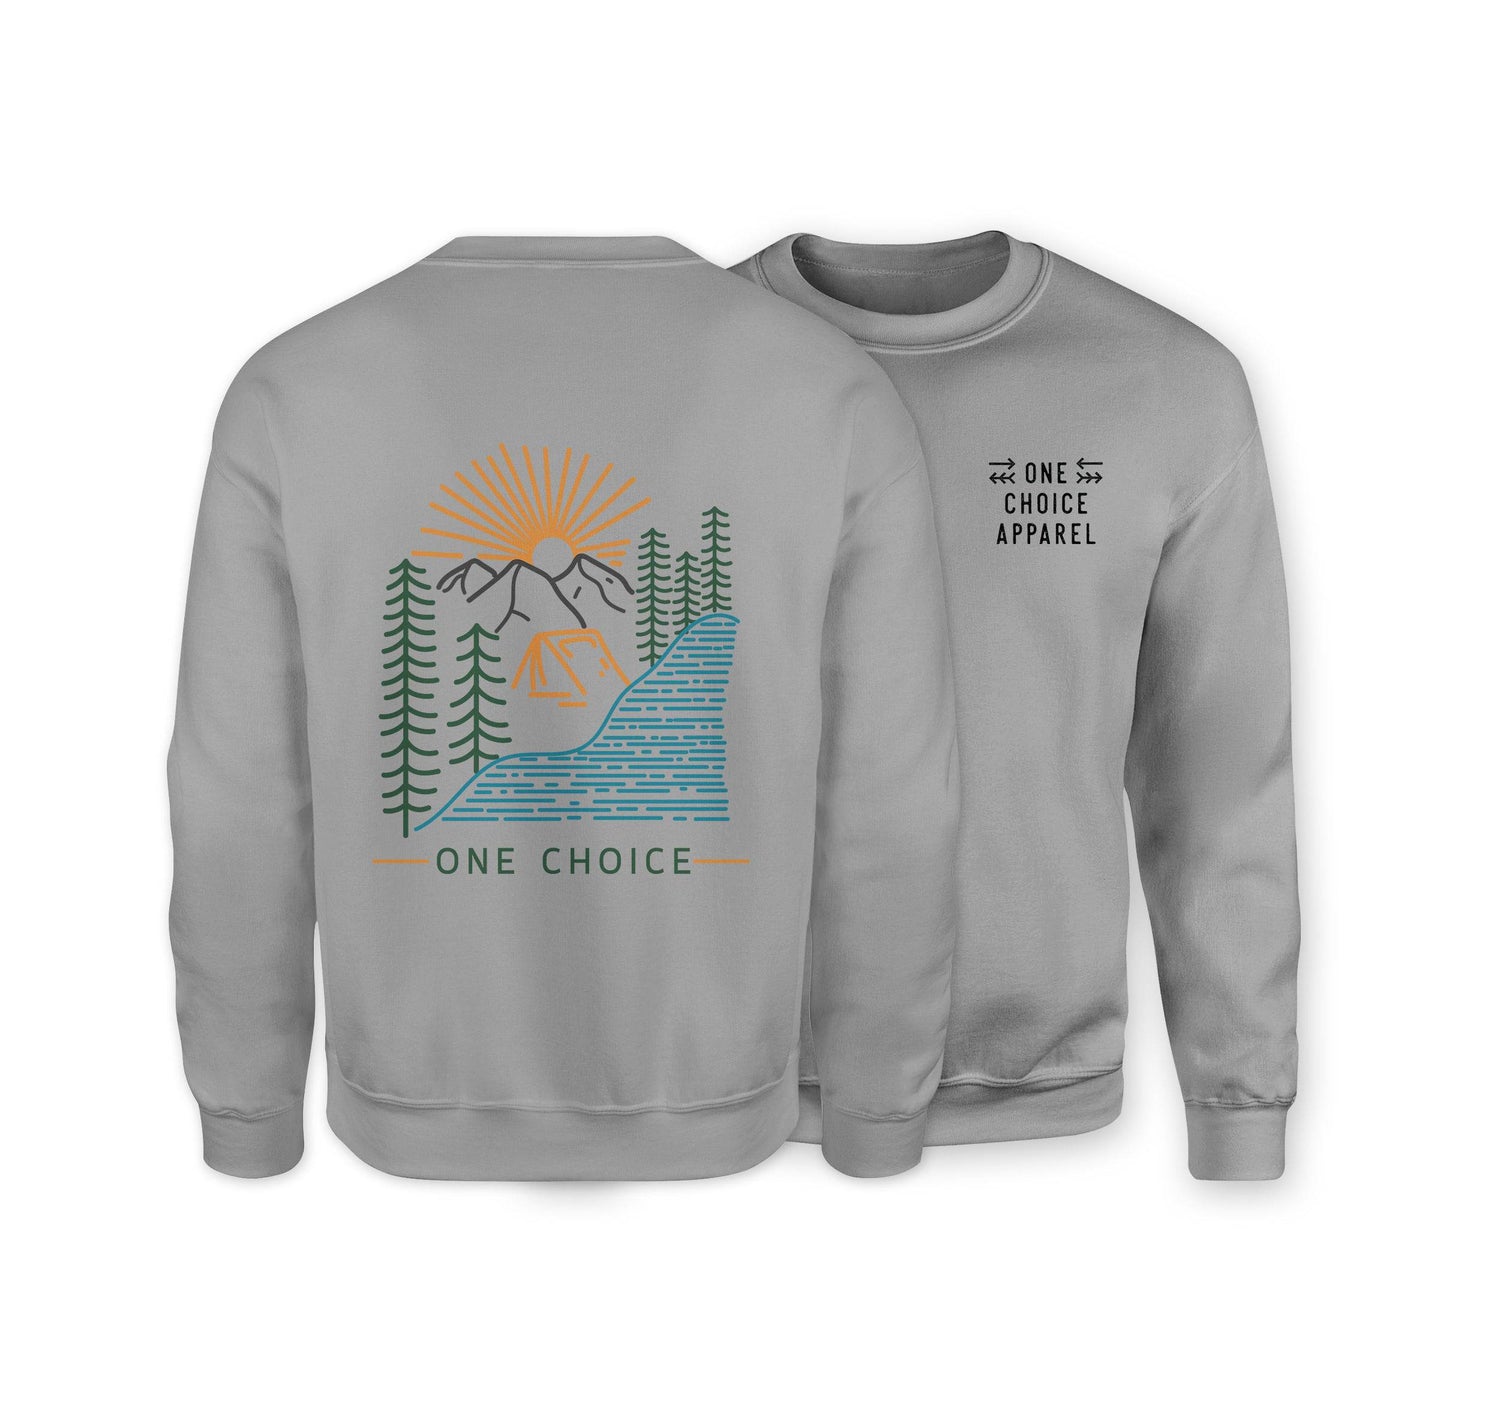 Camping Scene Sweatshirt - Organic Cotton Sweatshirt - One Choice Apparel